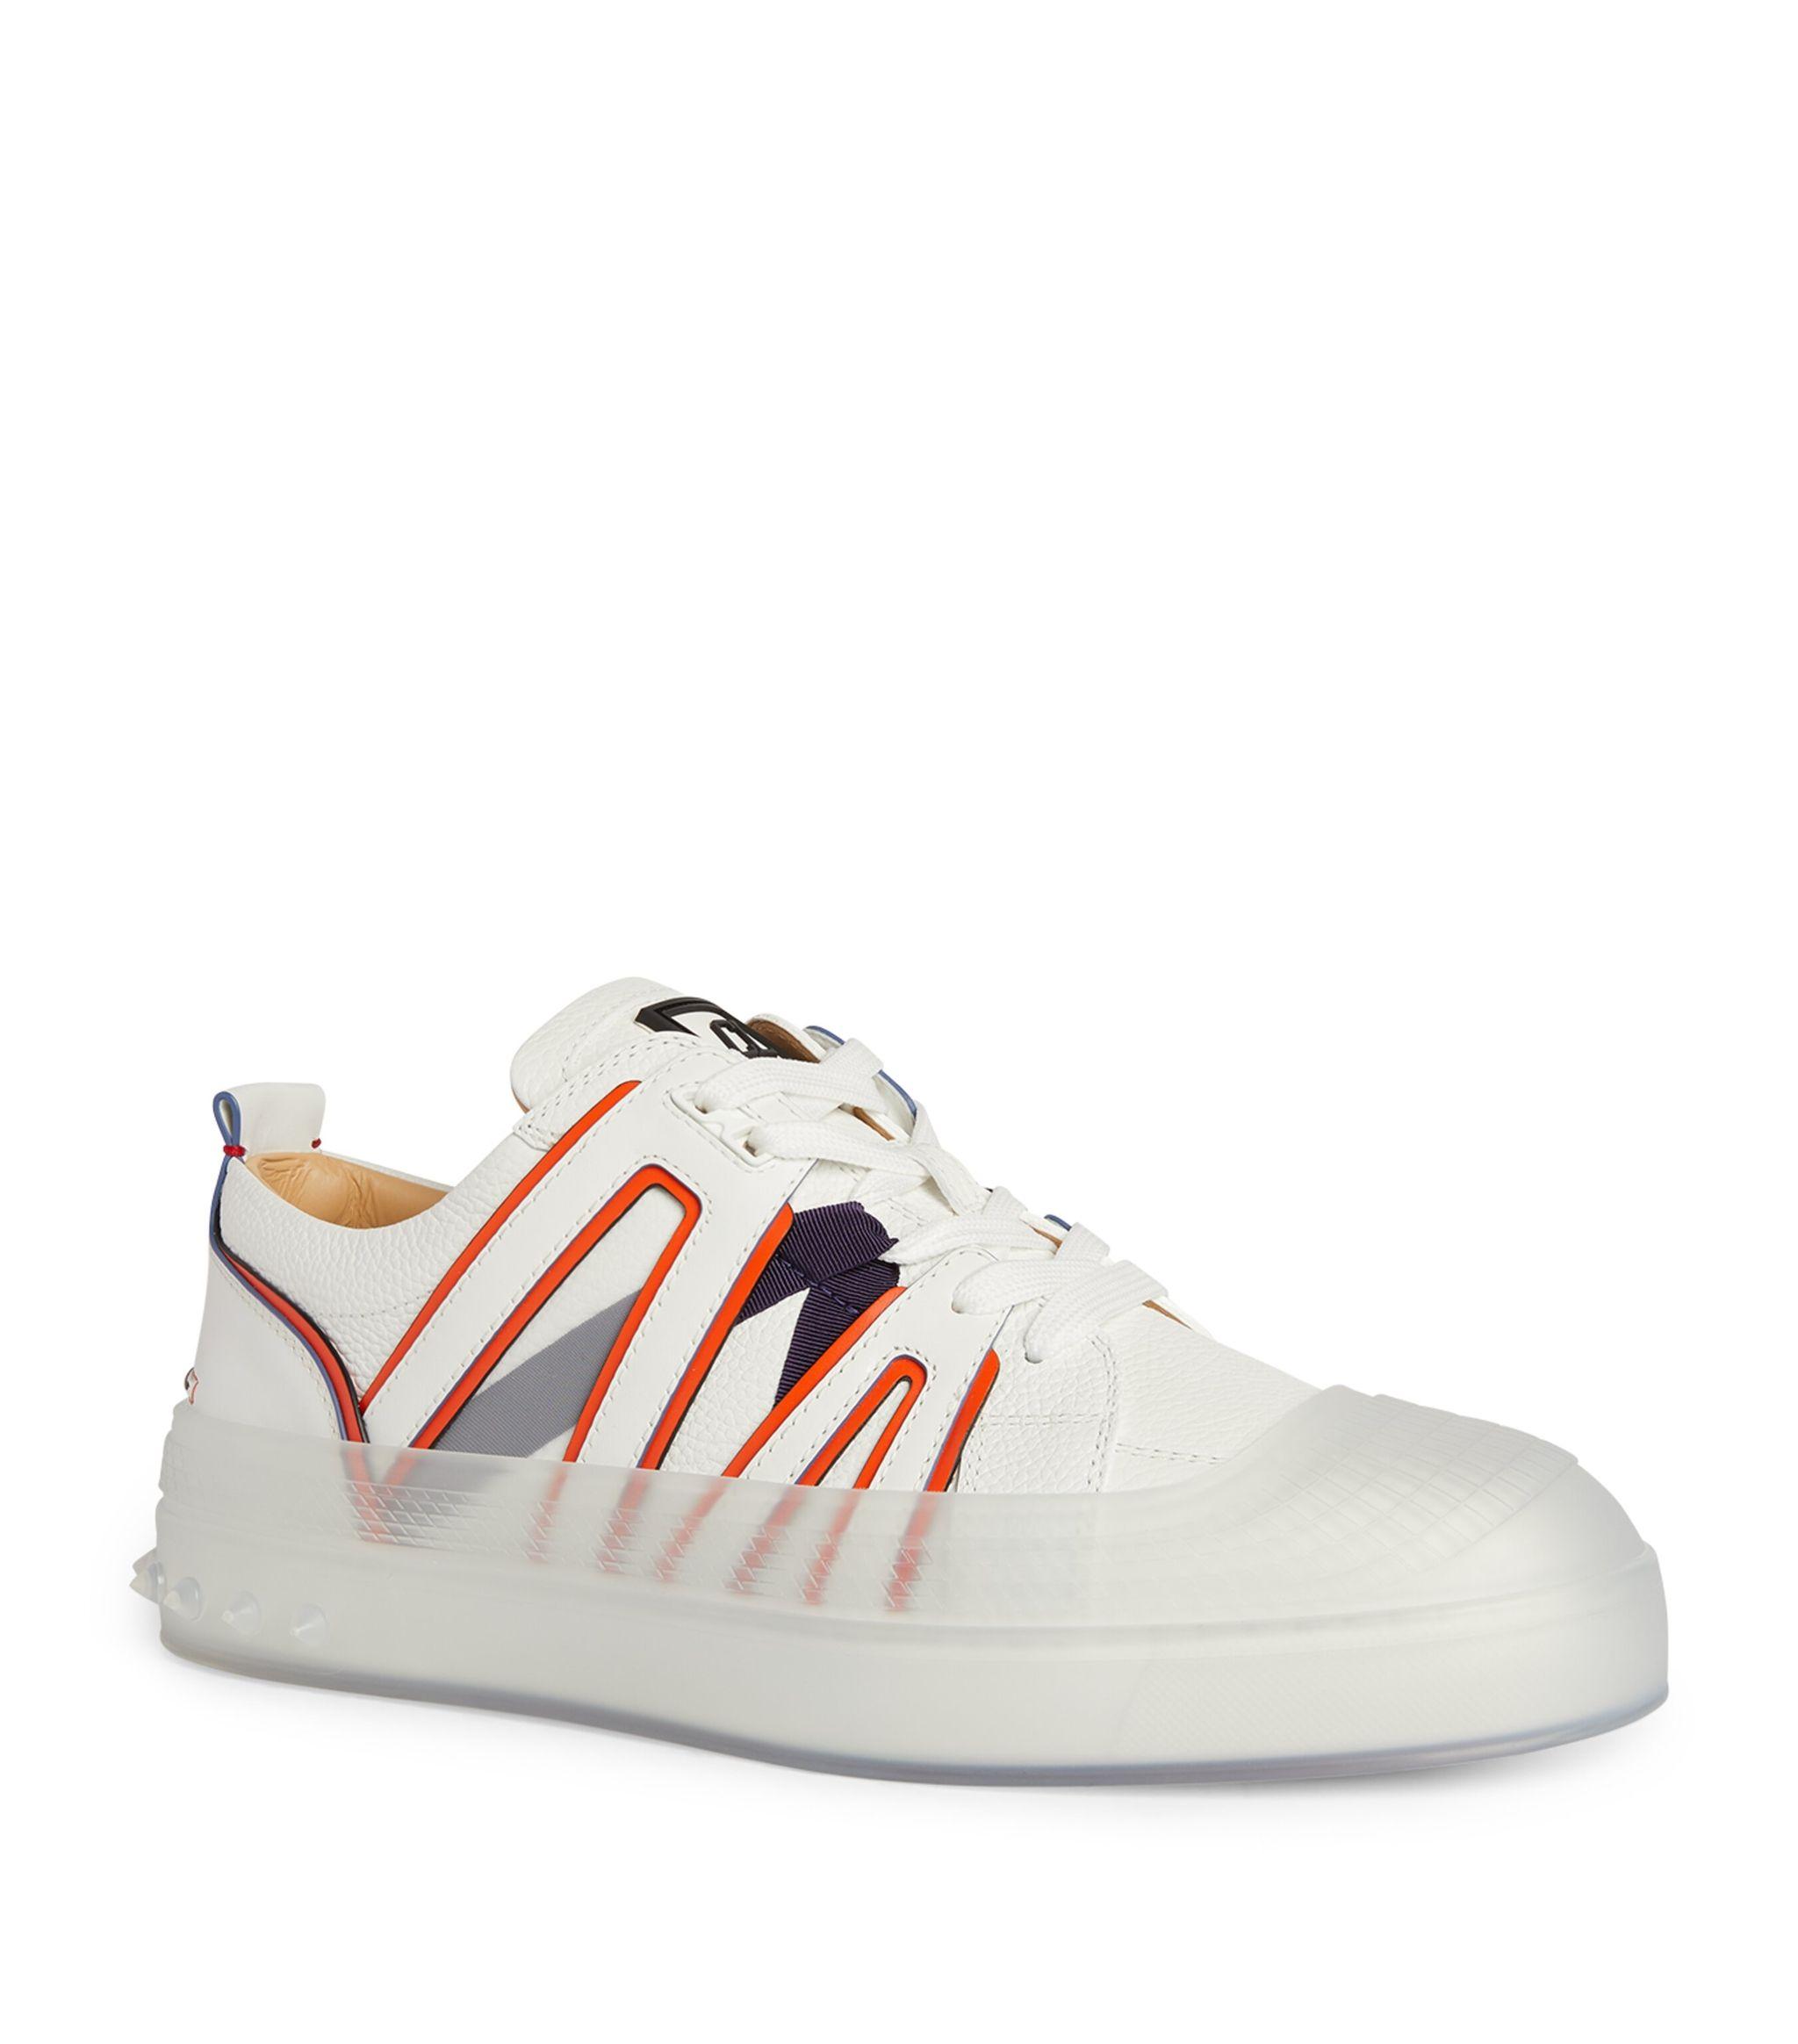 Christian Louboutin Mens Vida Caged High-top Sneakers Size 10 US / 43 EU  White